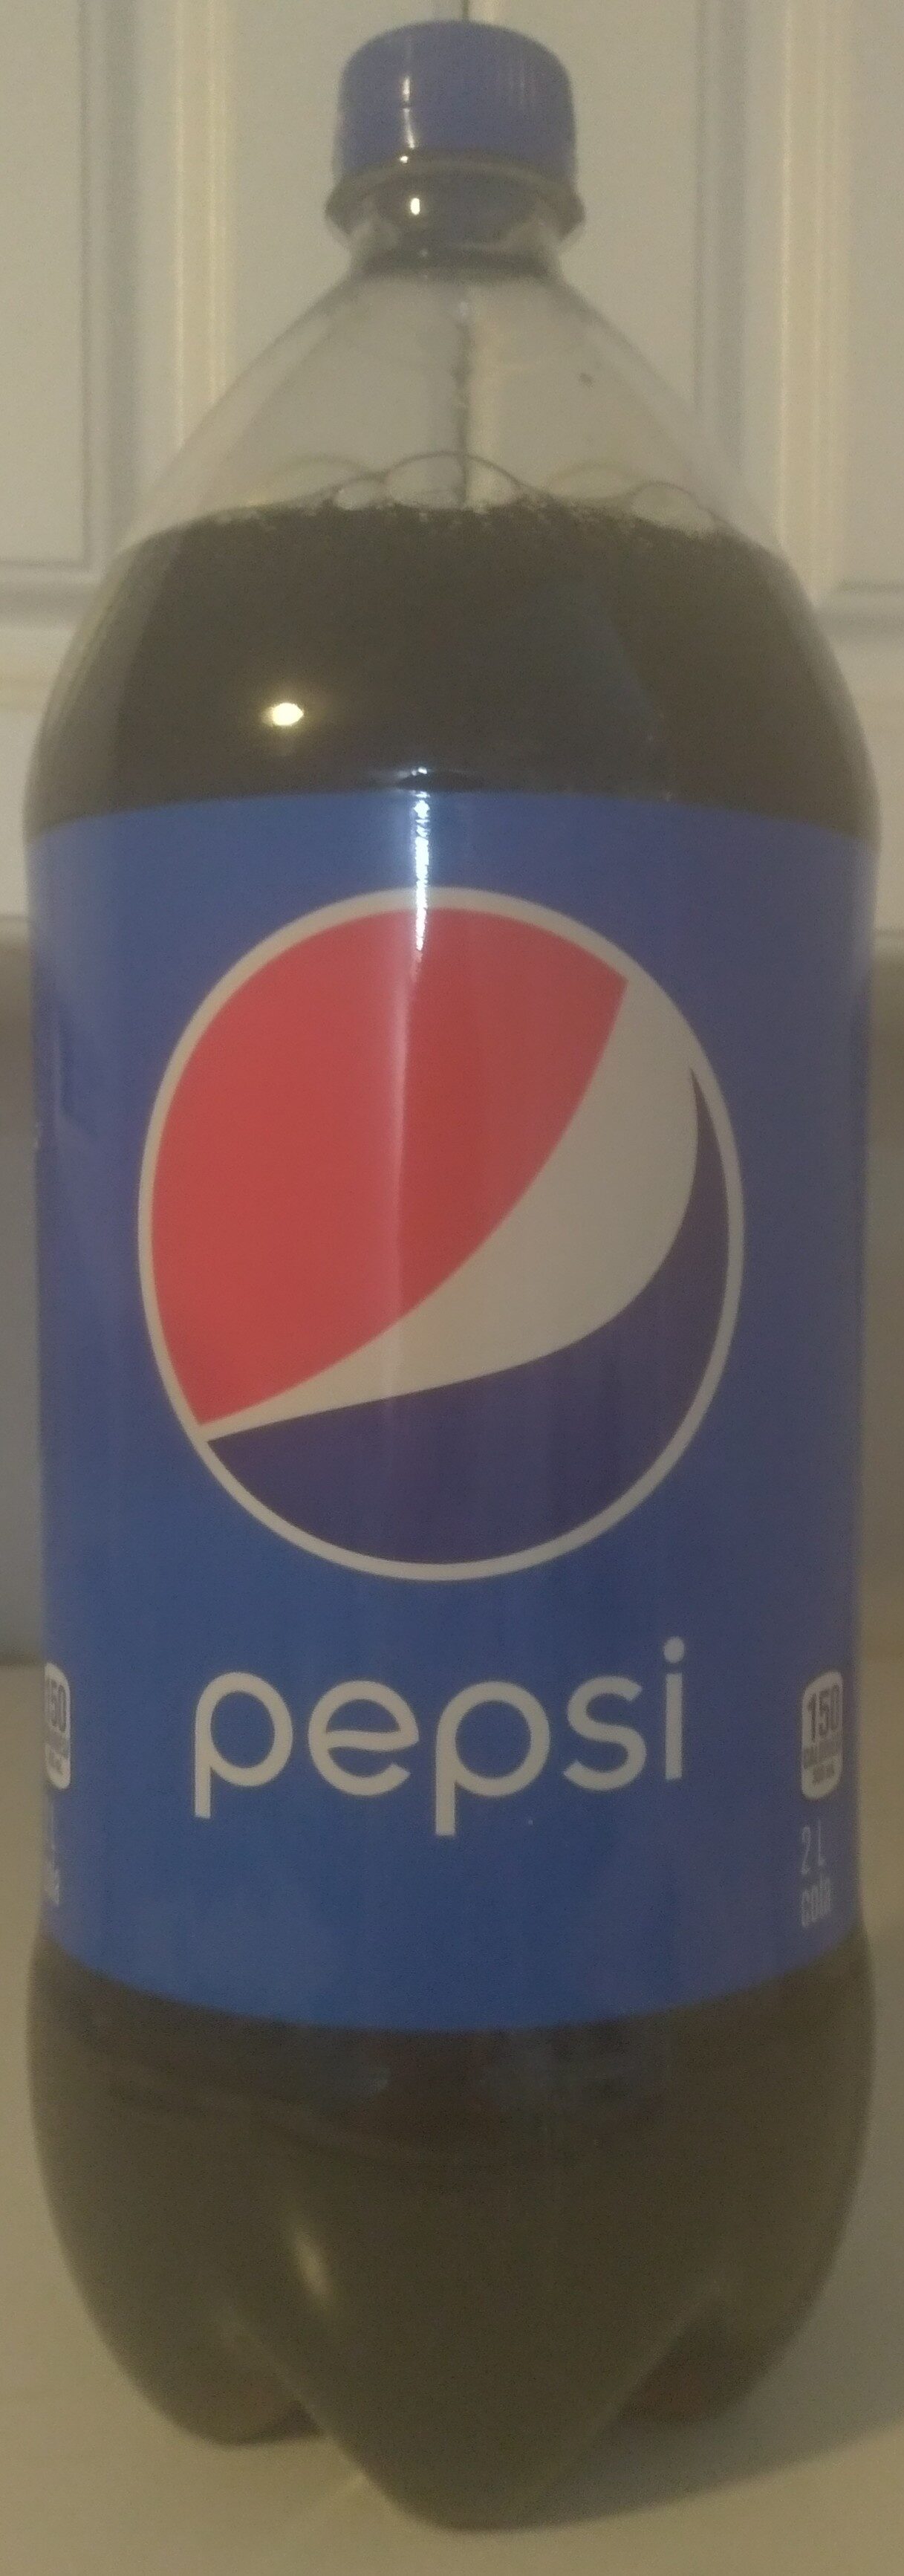 Pepsi - Product - en